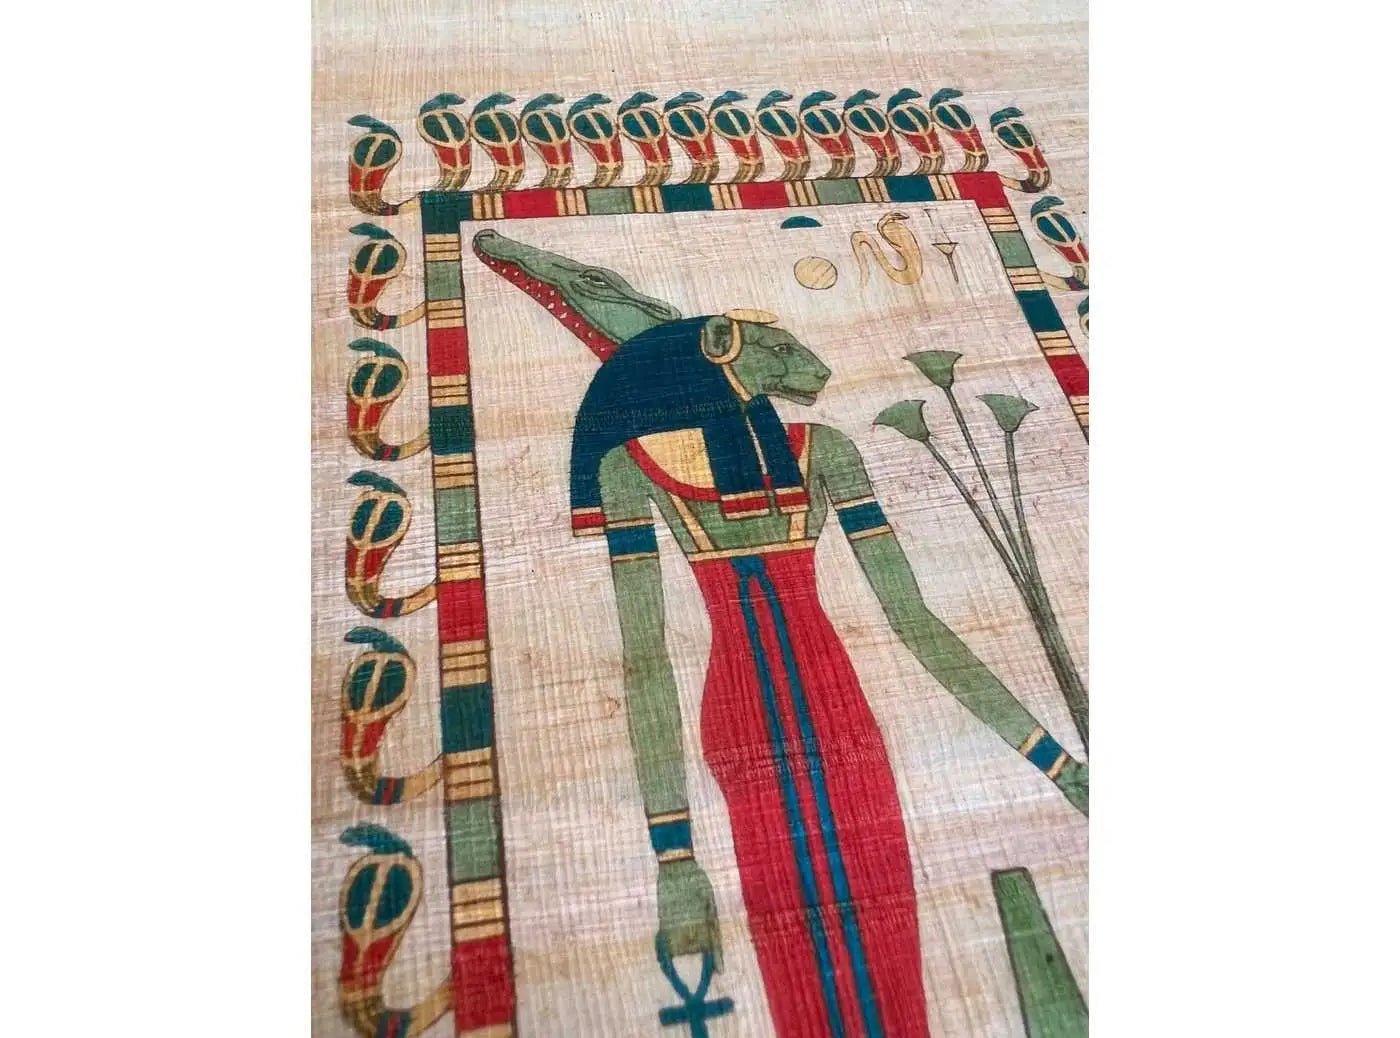 Sekhmet Illustration from Pantheon Egyptien Printing on Papyrus - Goddess Sekmet, Lioness, Crocodile, Ankh, Cobra